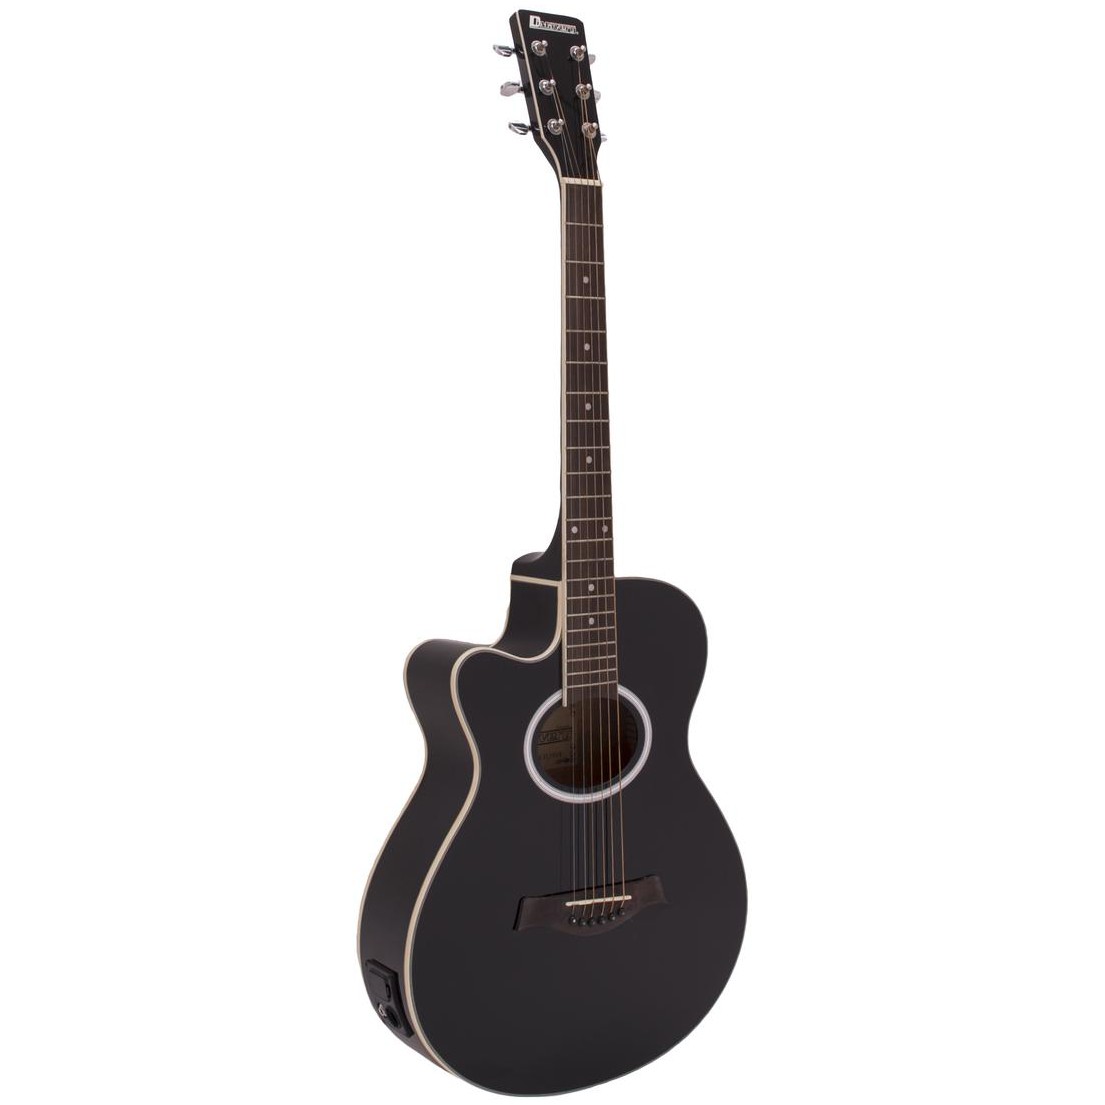 Dimavery AW-400, elektroakustická kytara typu Folk levoruká, černá